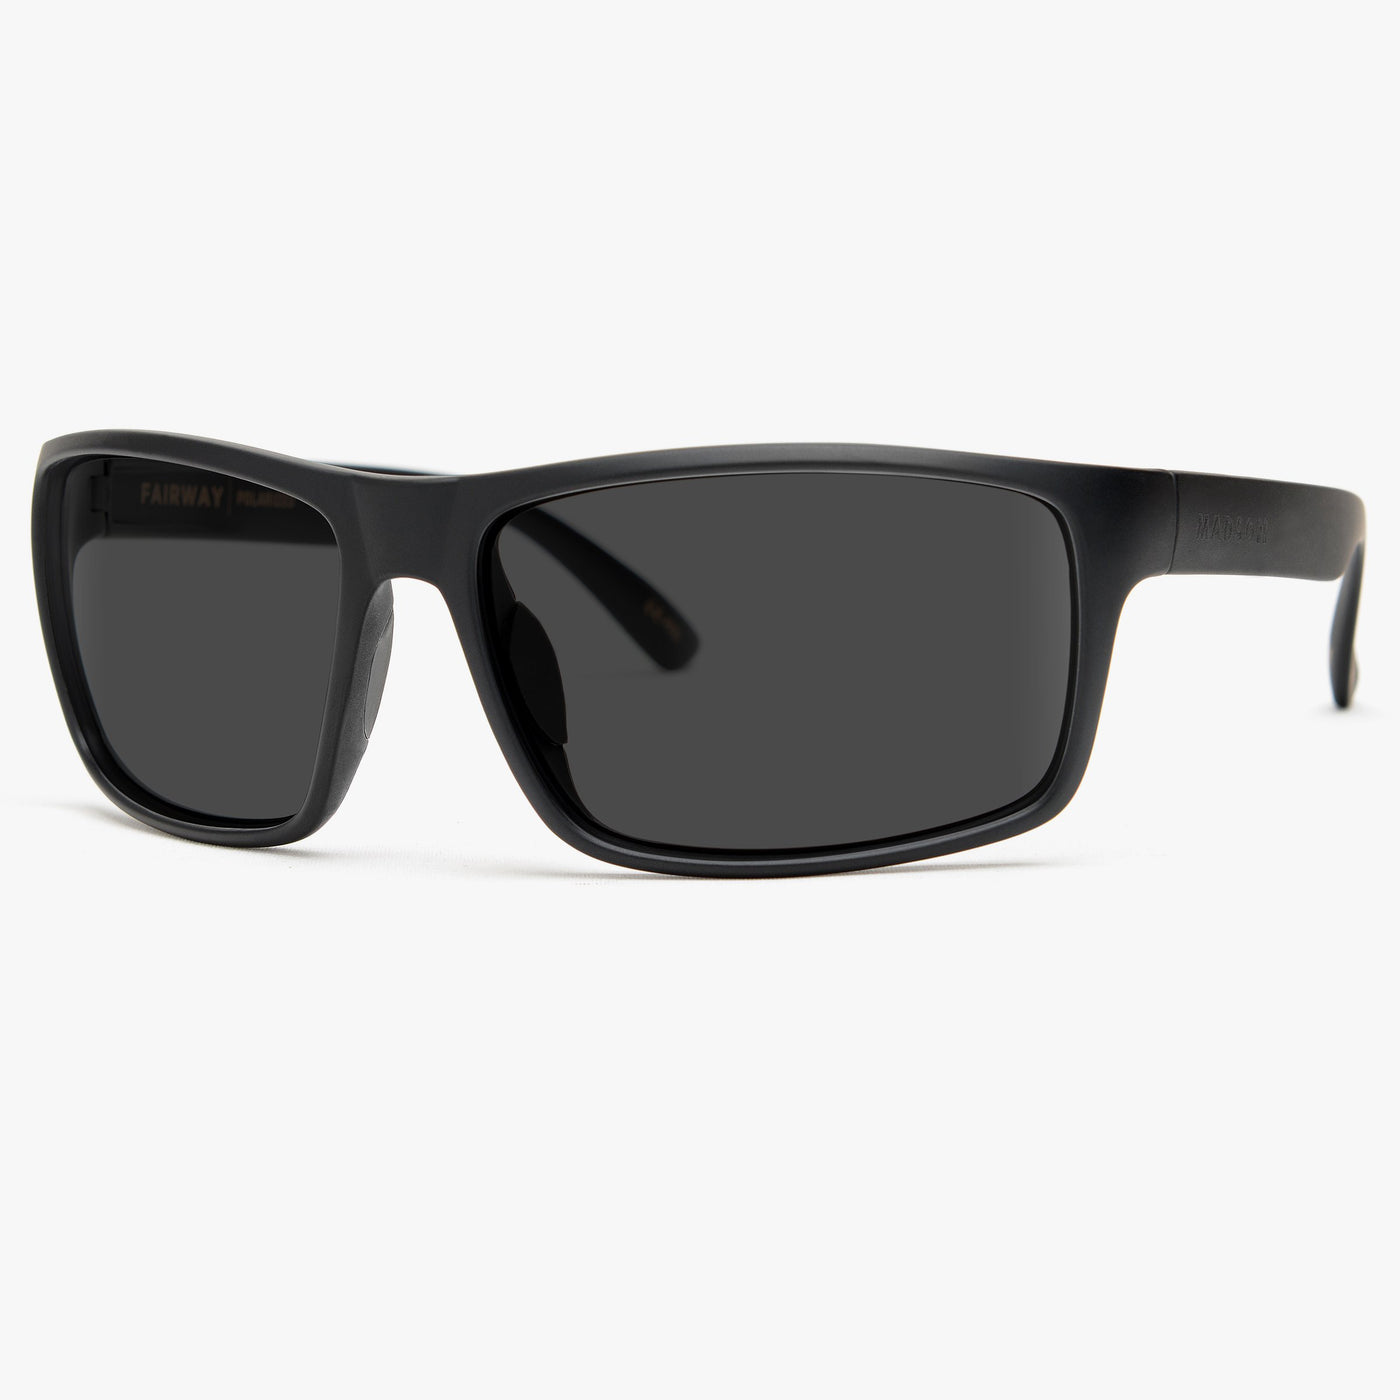 Fairway Polarized Sunglasses for Men | Madson Of America – Madson